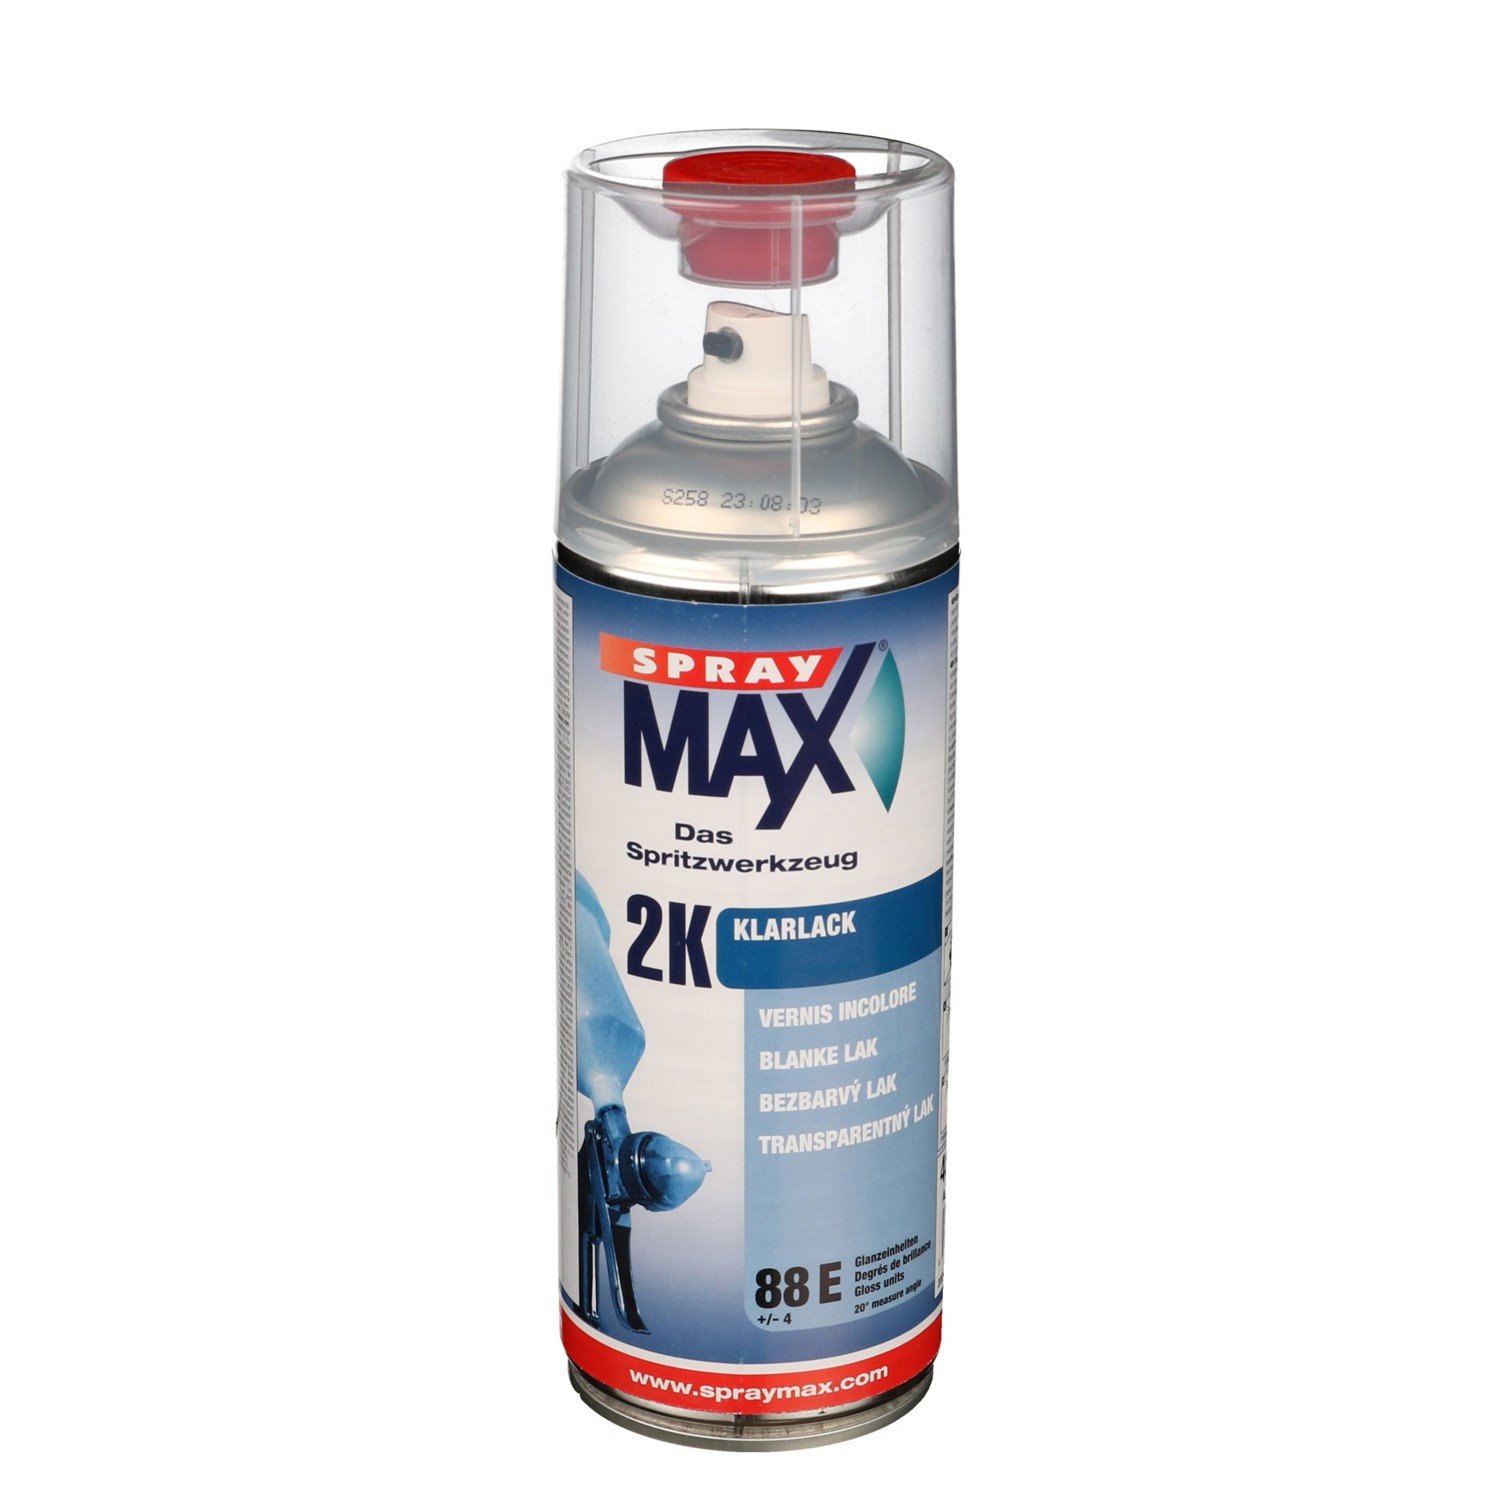 Spray Max 2K Klarlack Spray